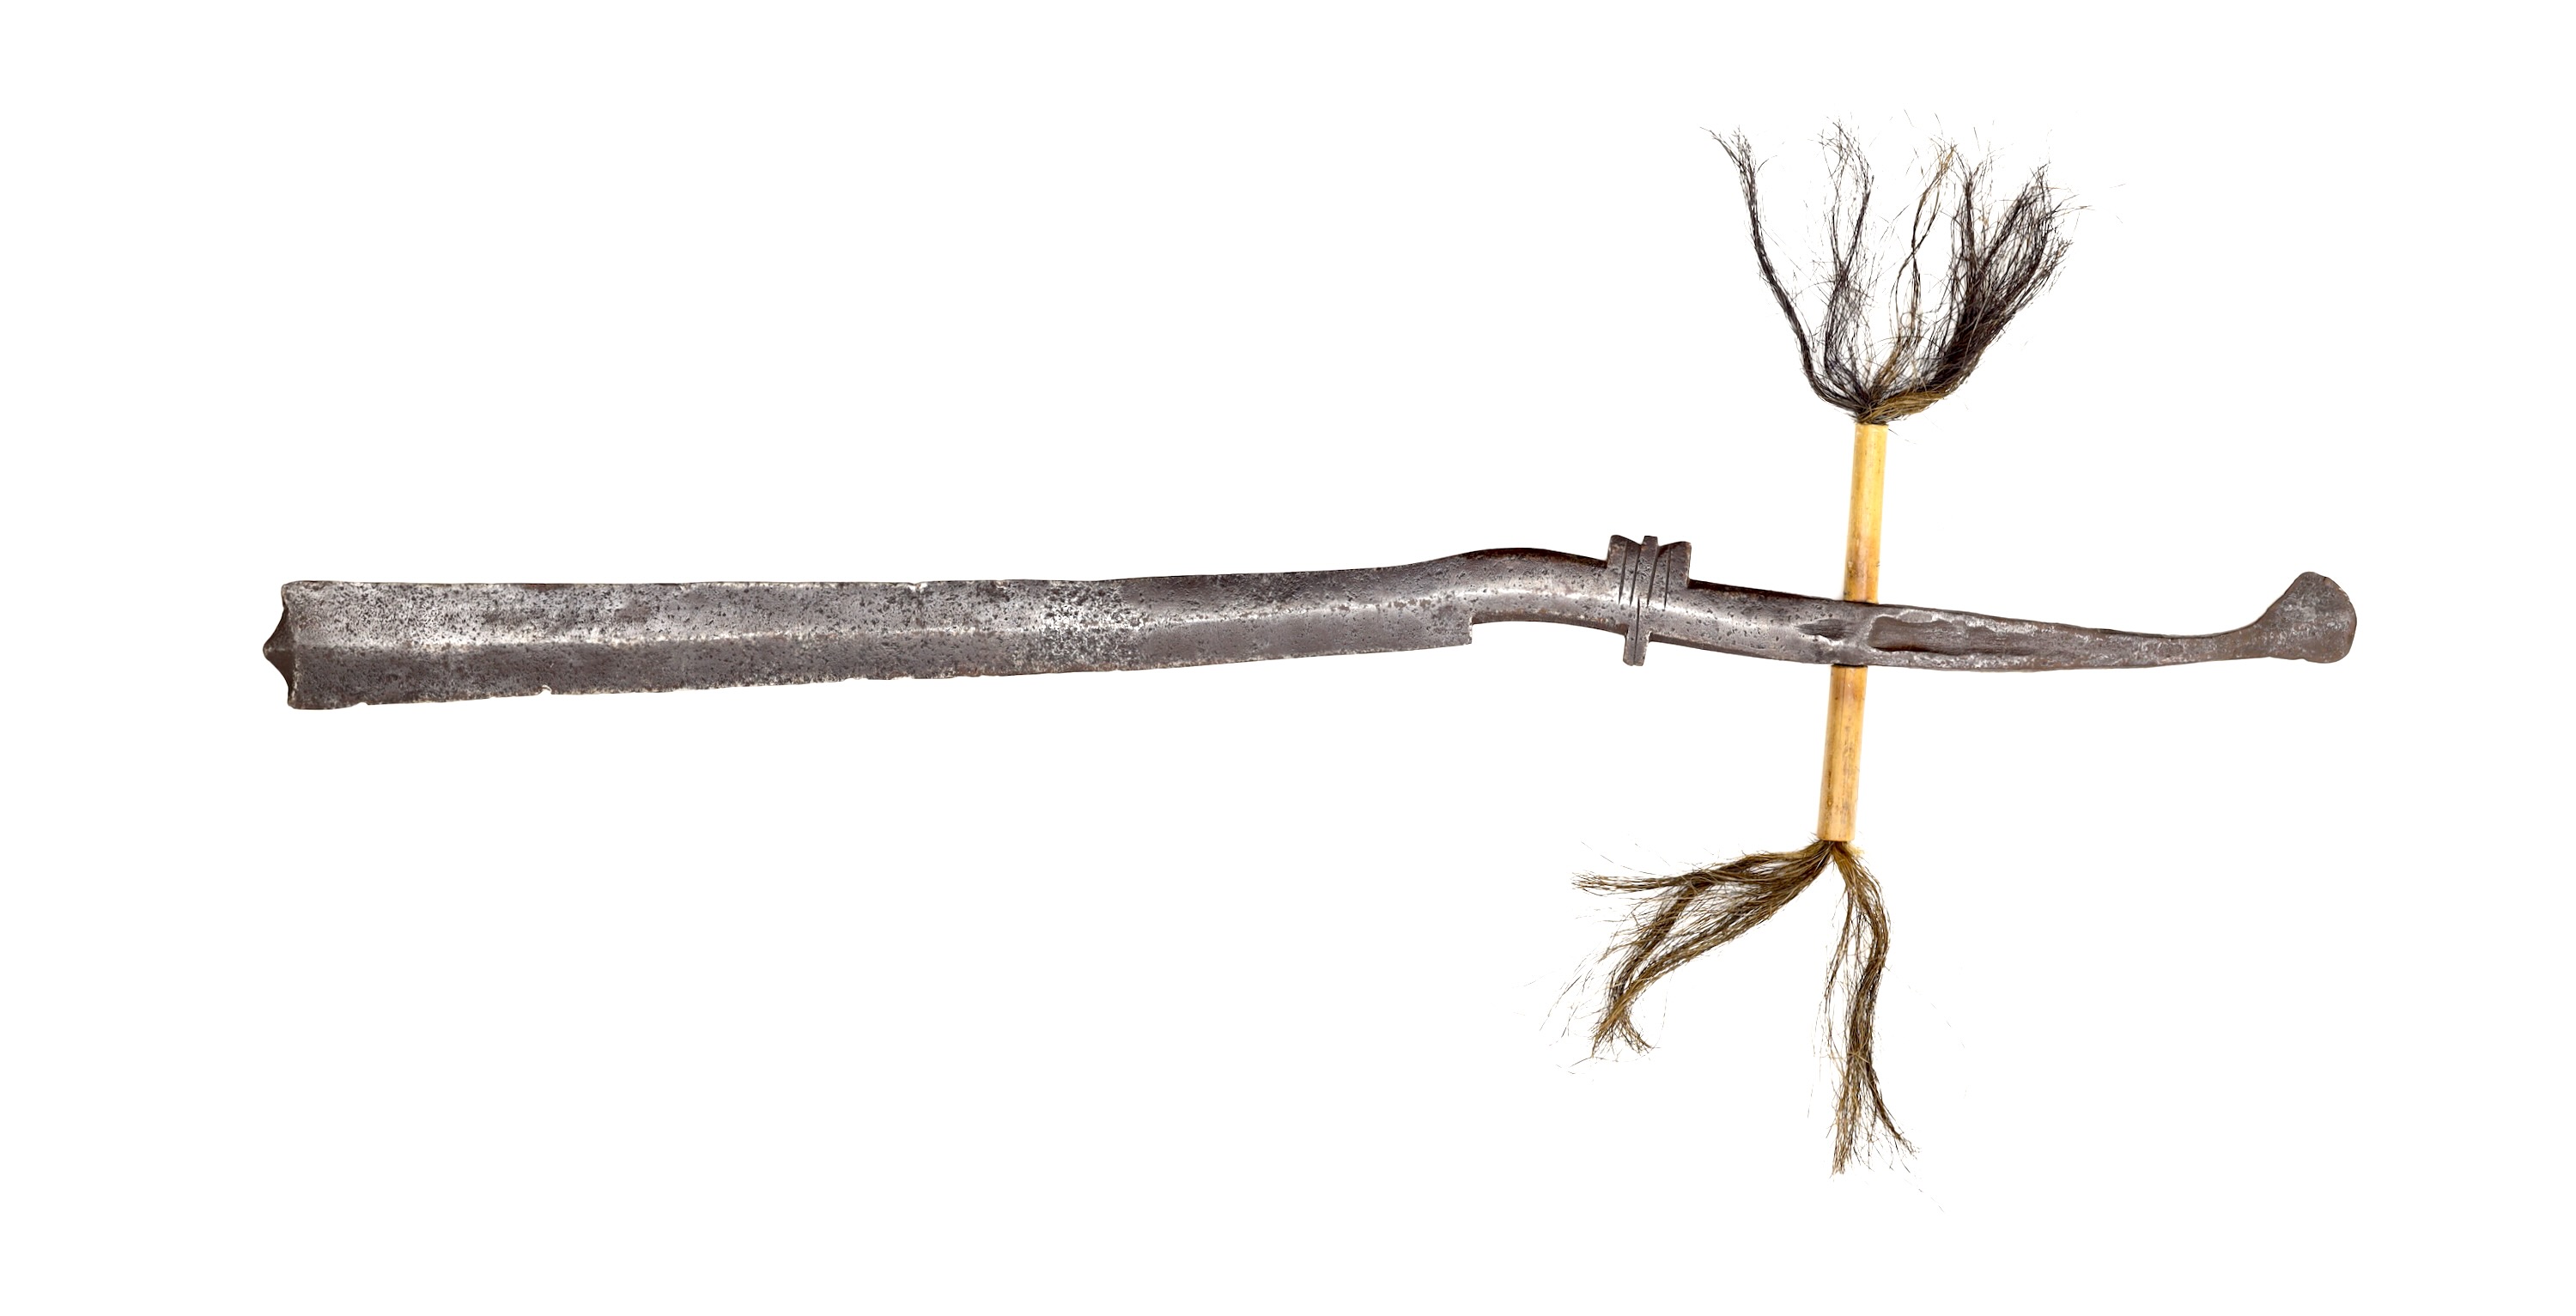 Milam sword of the Garo people